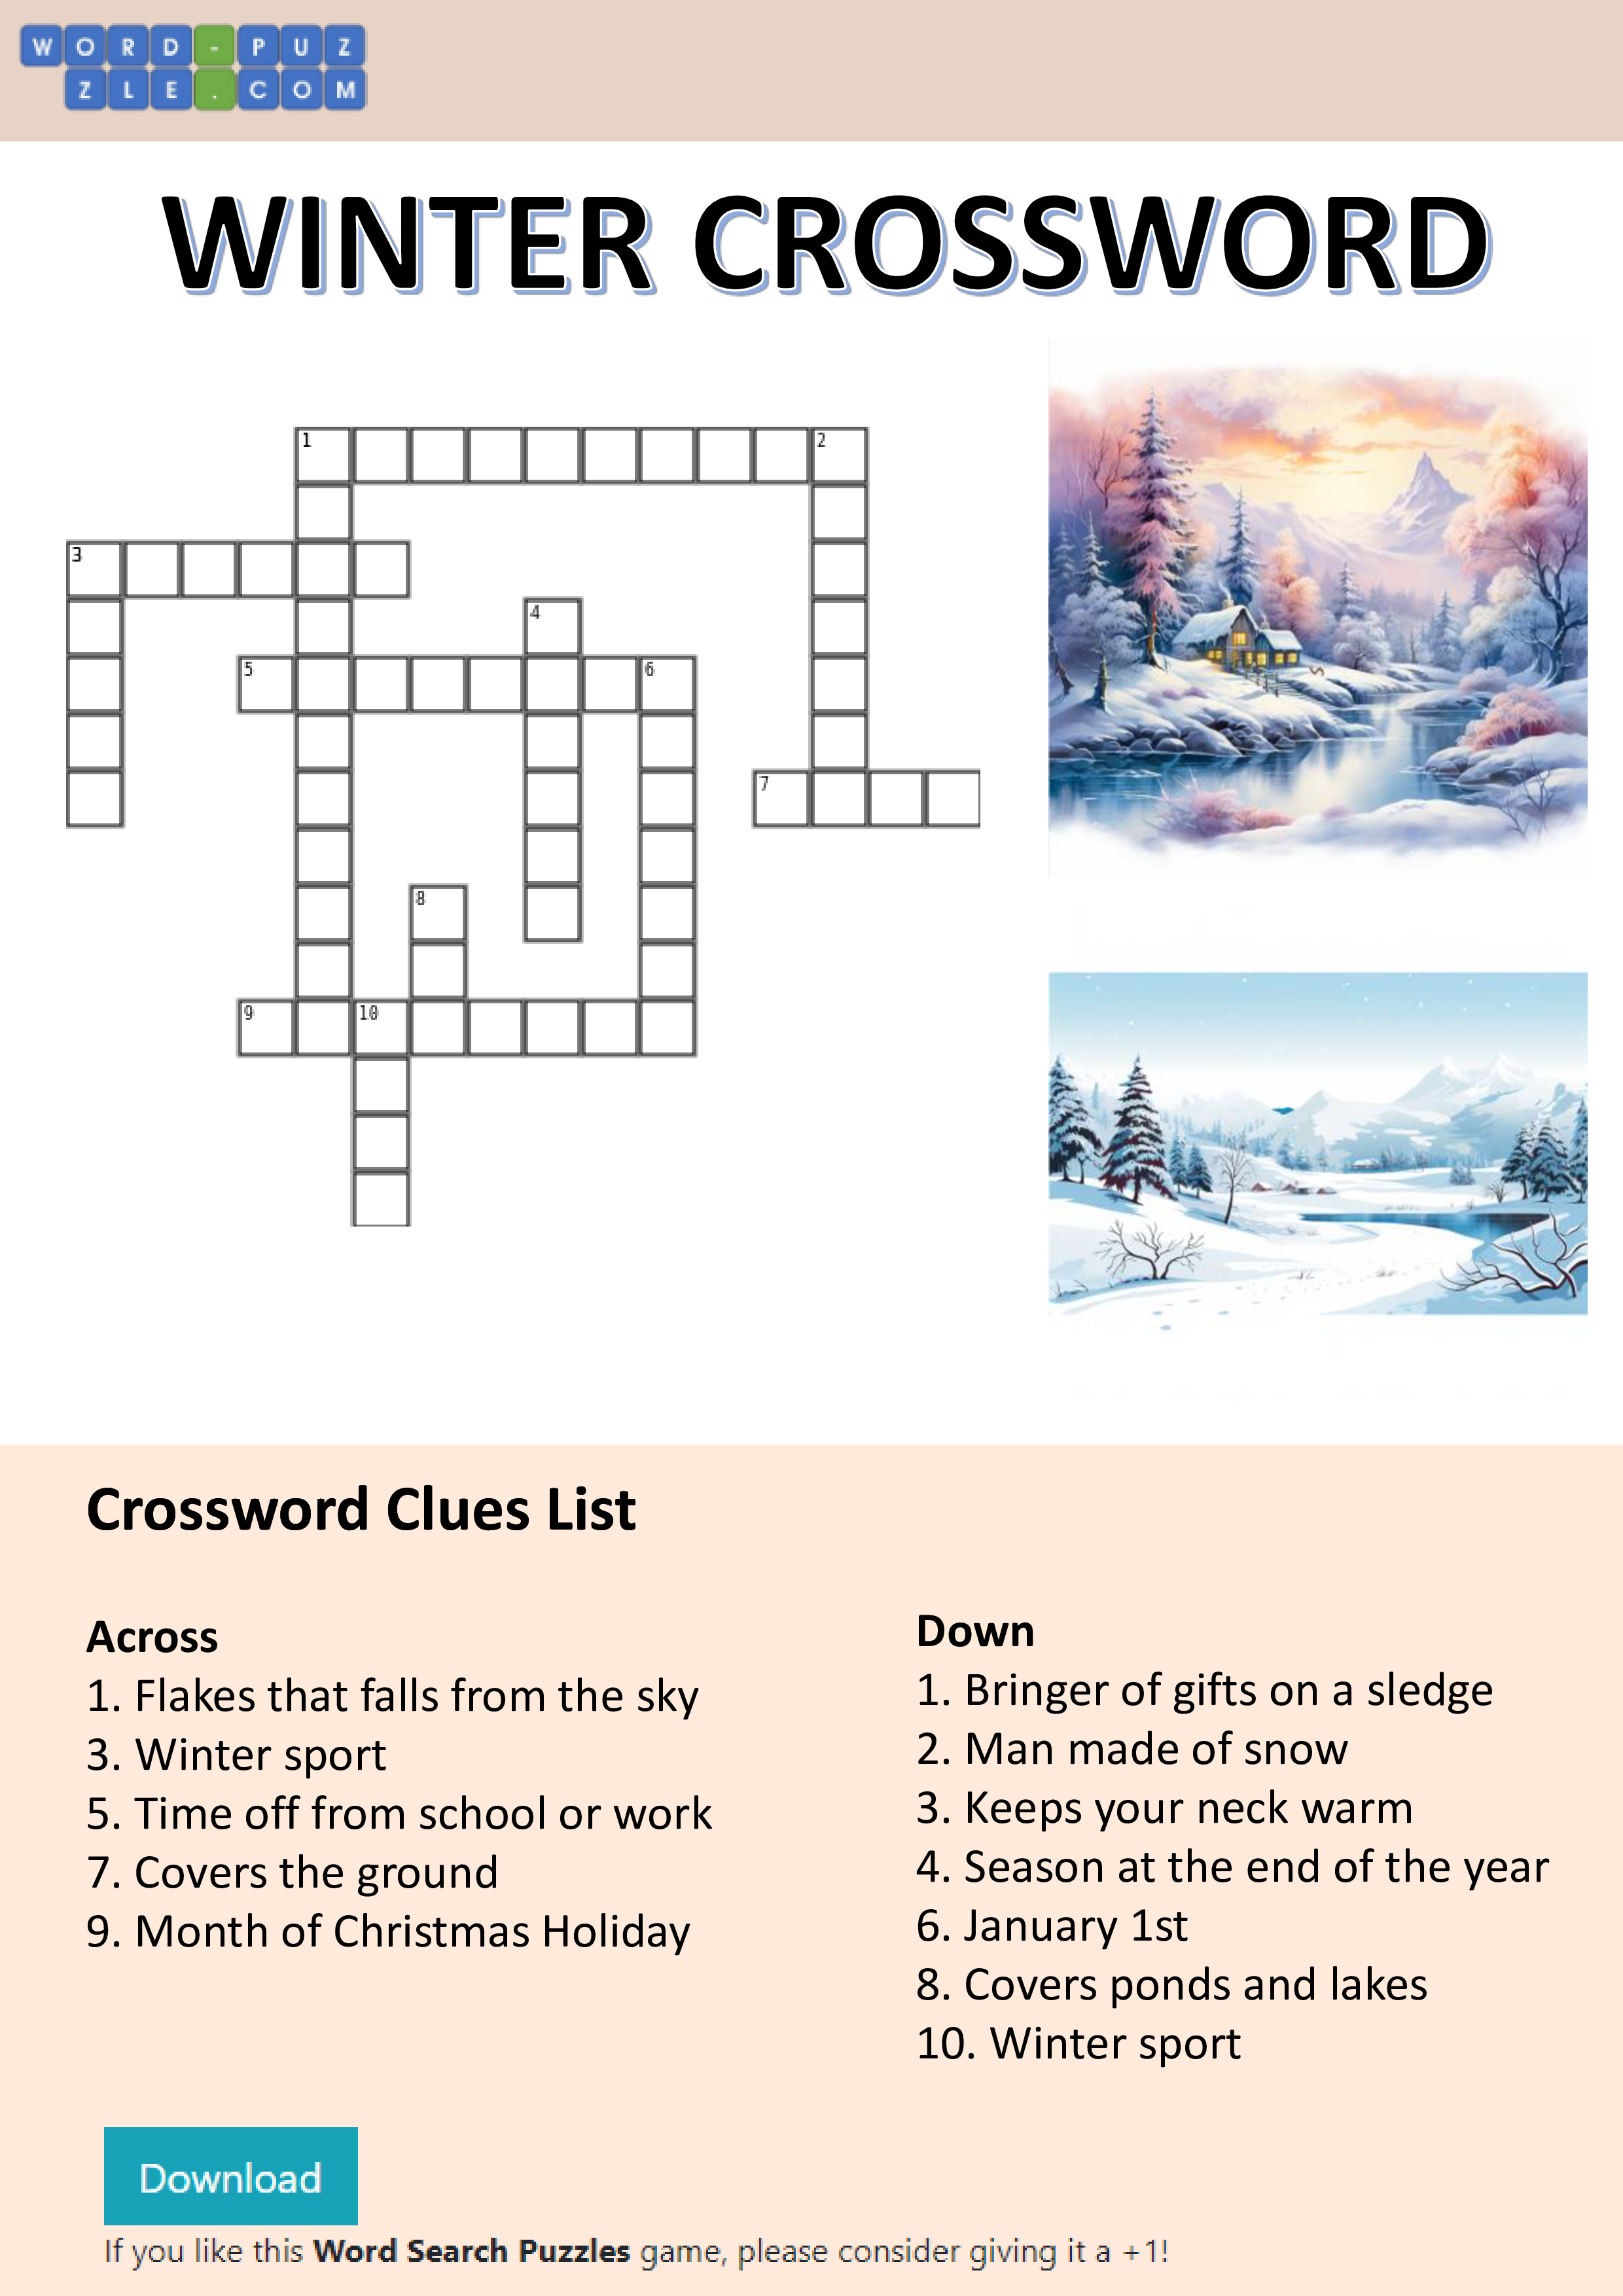 Winter Crossword main image